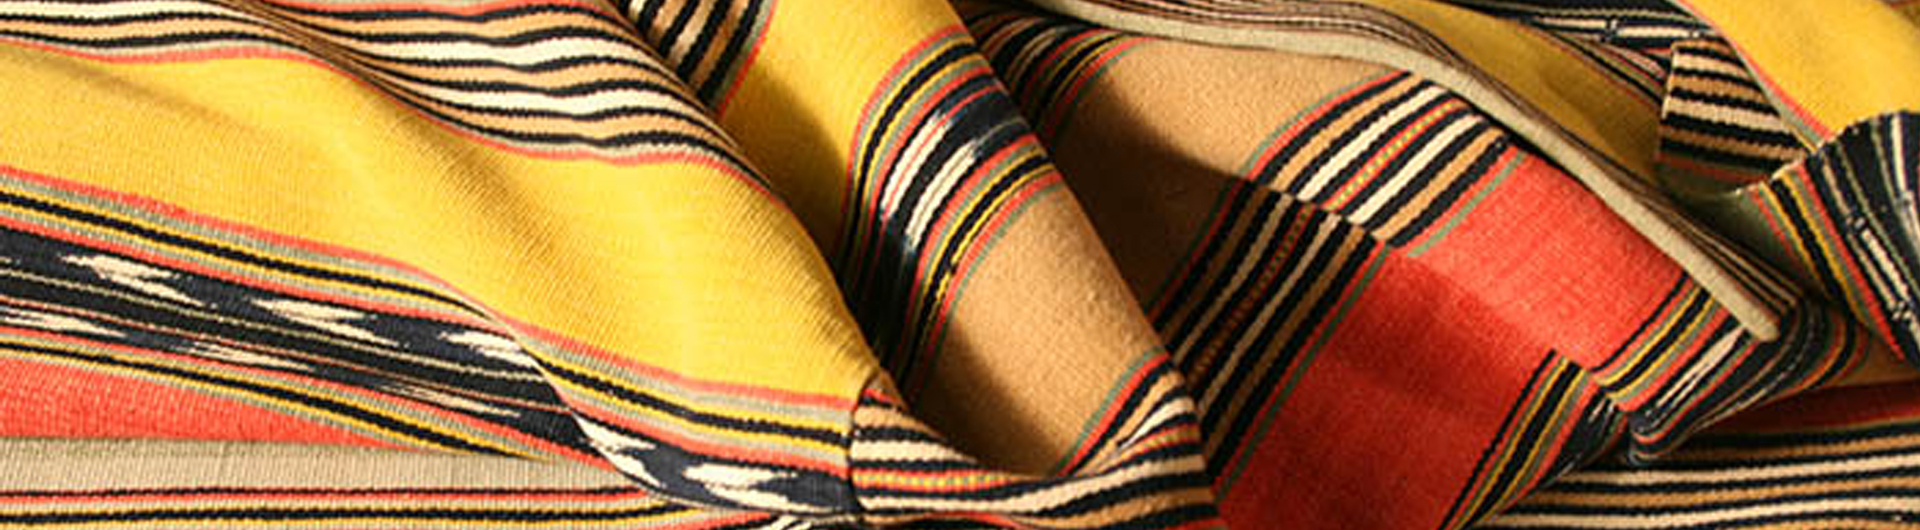 Wrap Art: Guatemalan Textiles